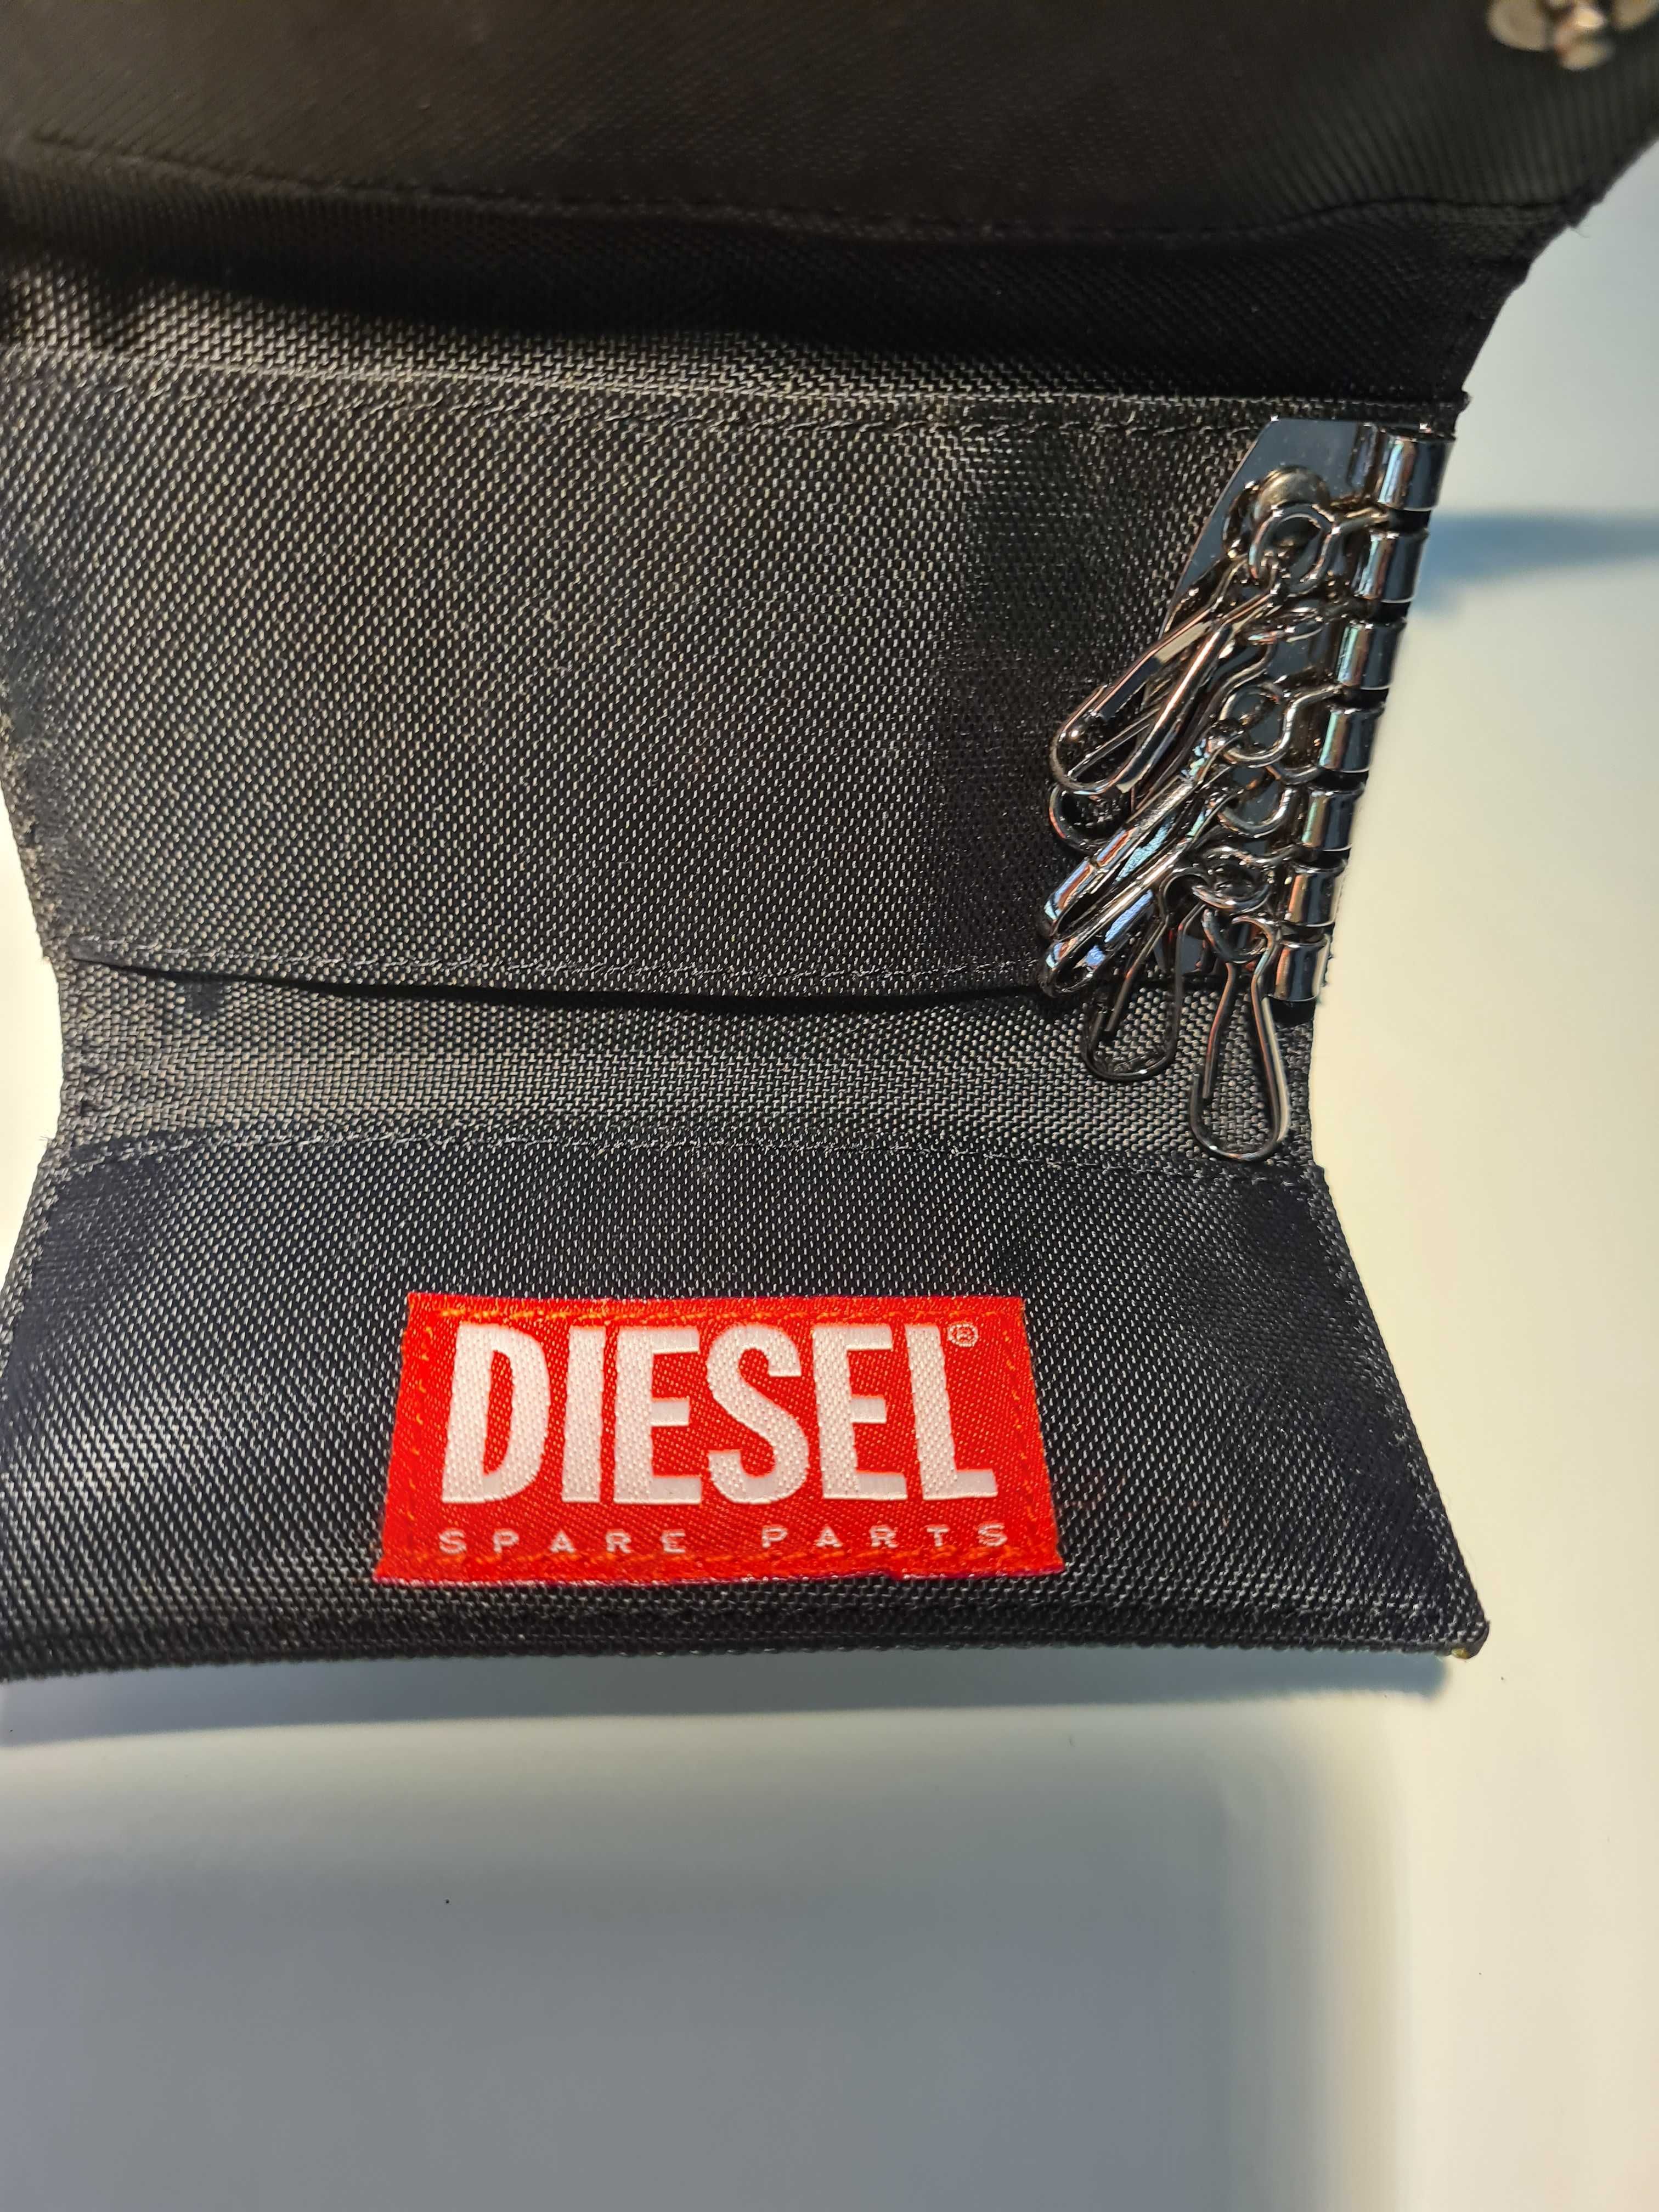 Porta- chaves da marca Diesel e outro